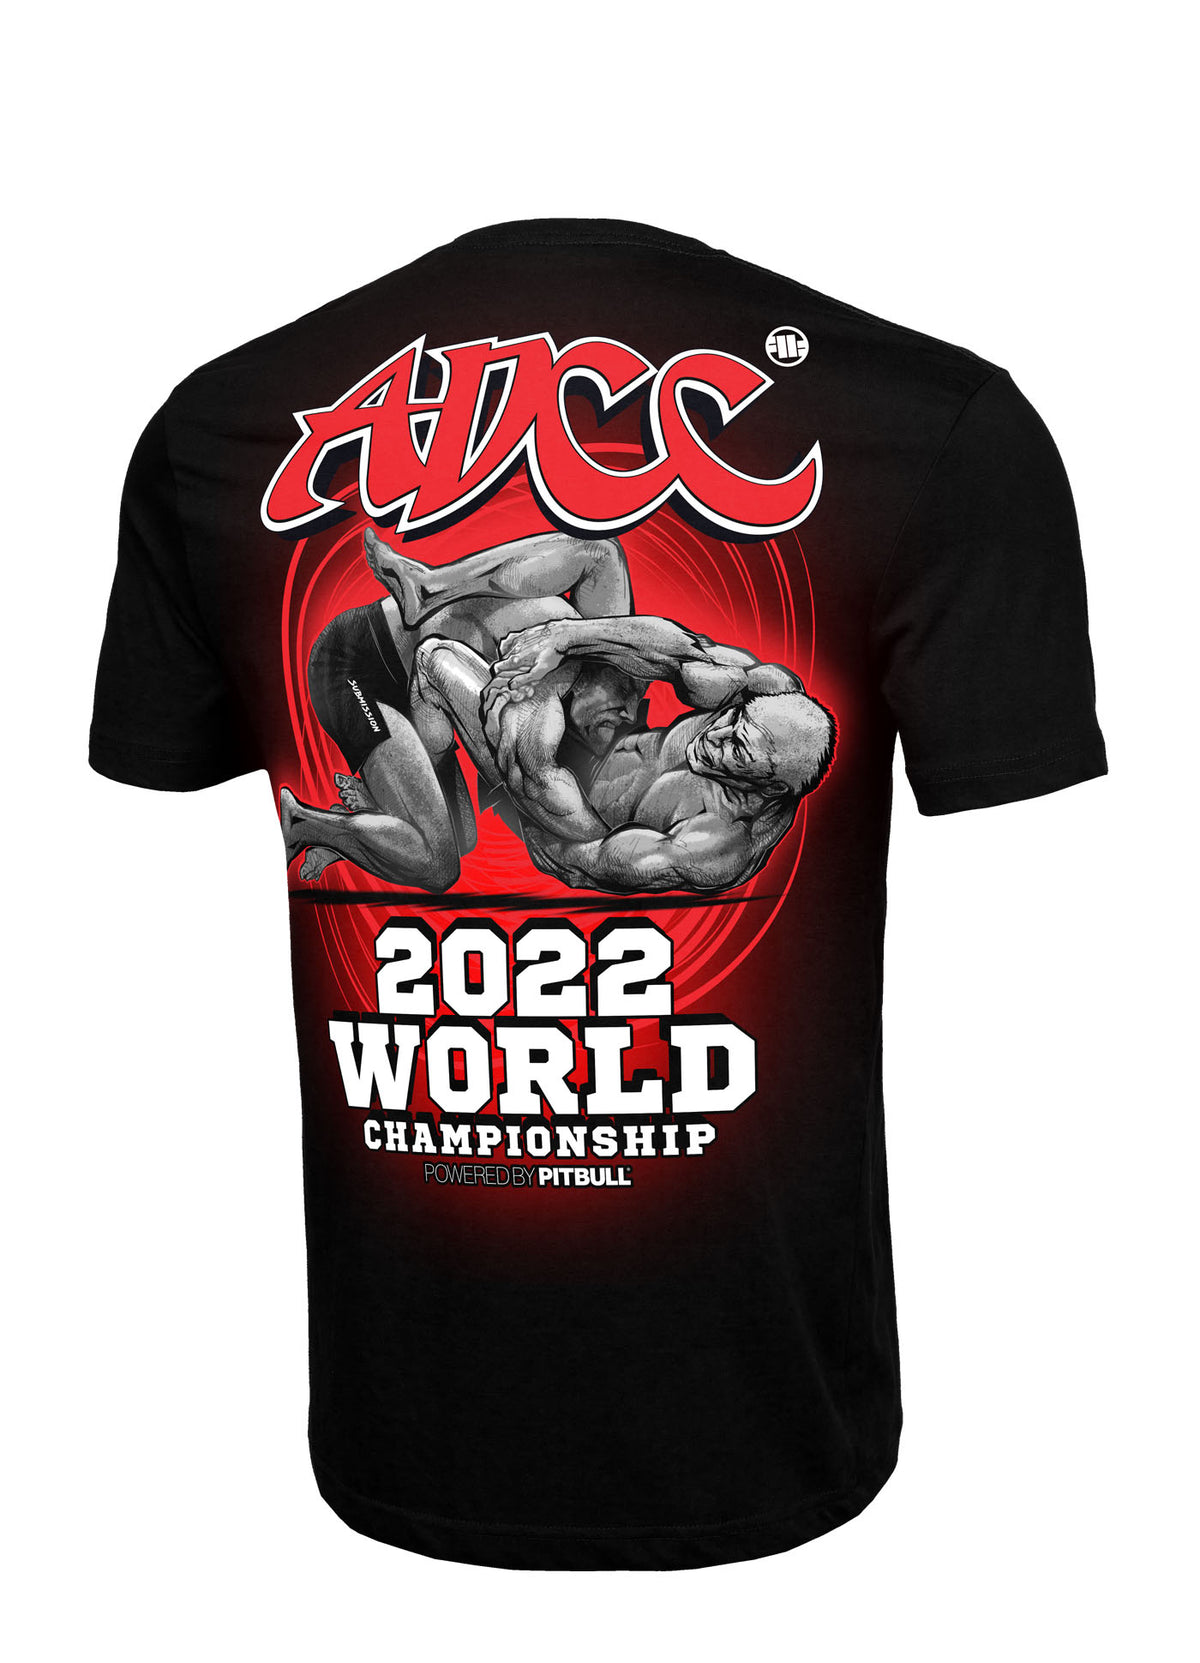 ADCC CHAMPIONSHIP 2022 GRAPPLING Black T-shirt.